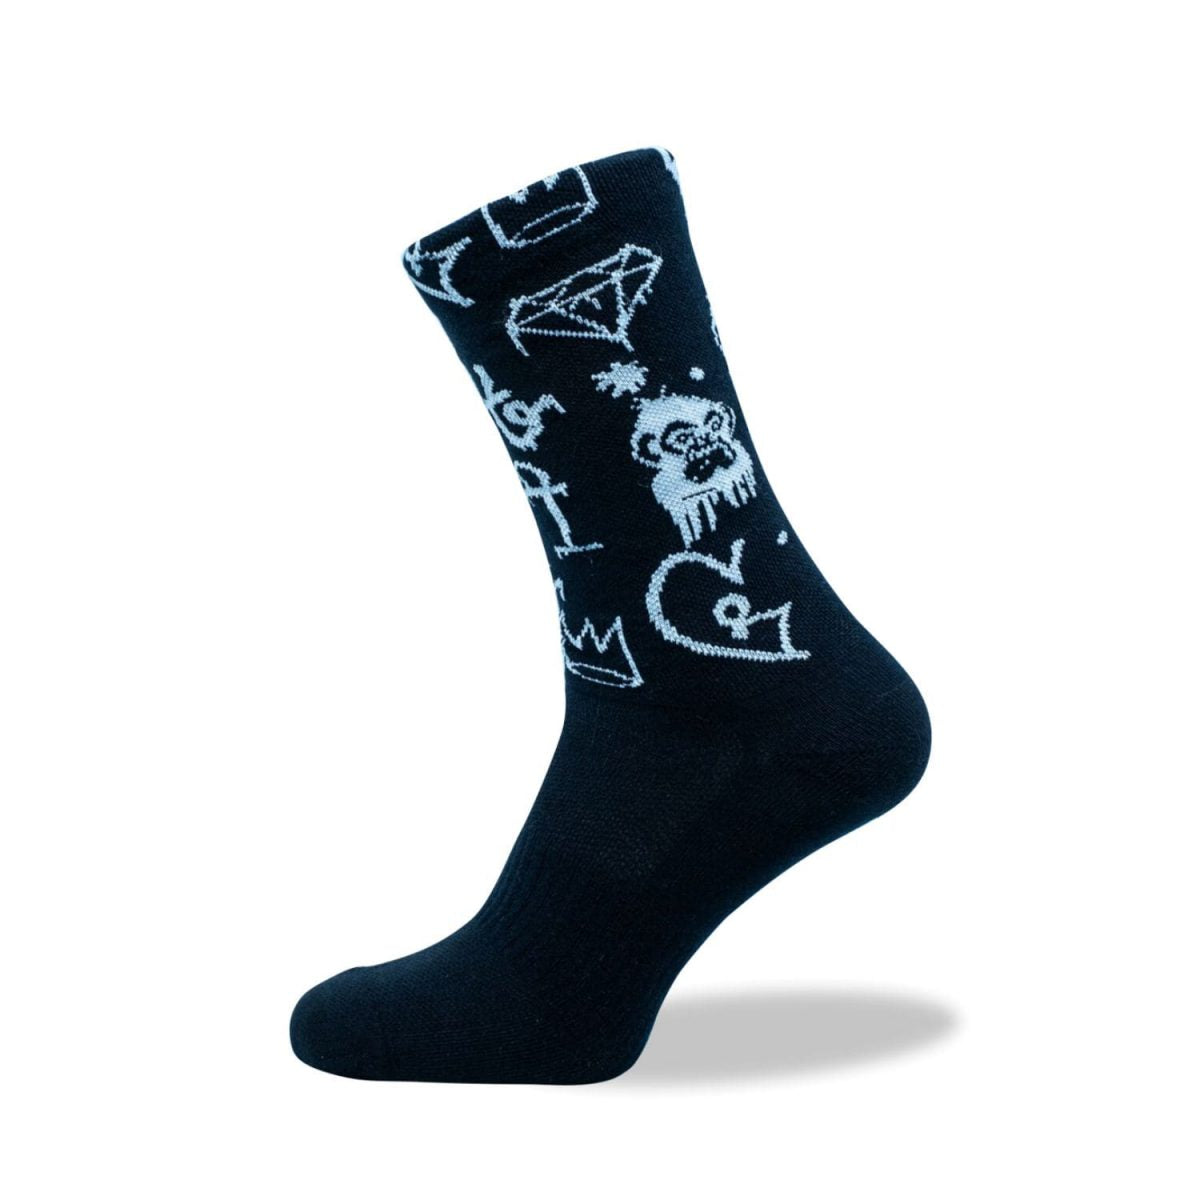 GRUMPY MONKEY - Knitted Socks (Graffiti Black)